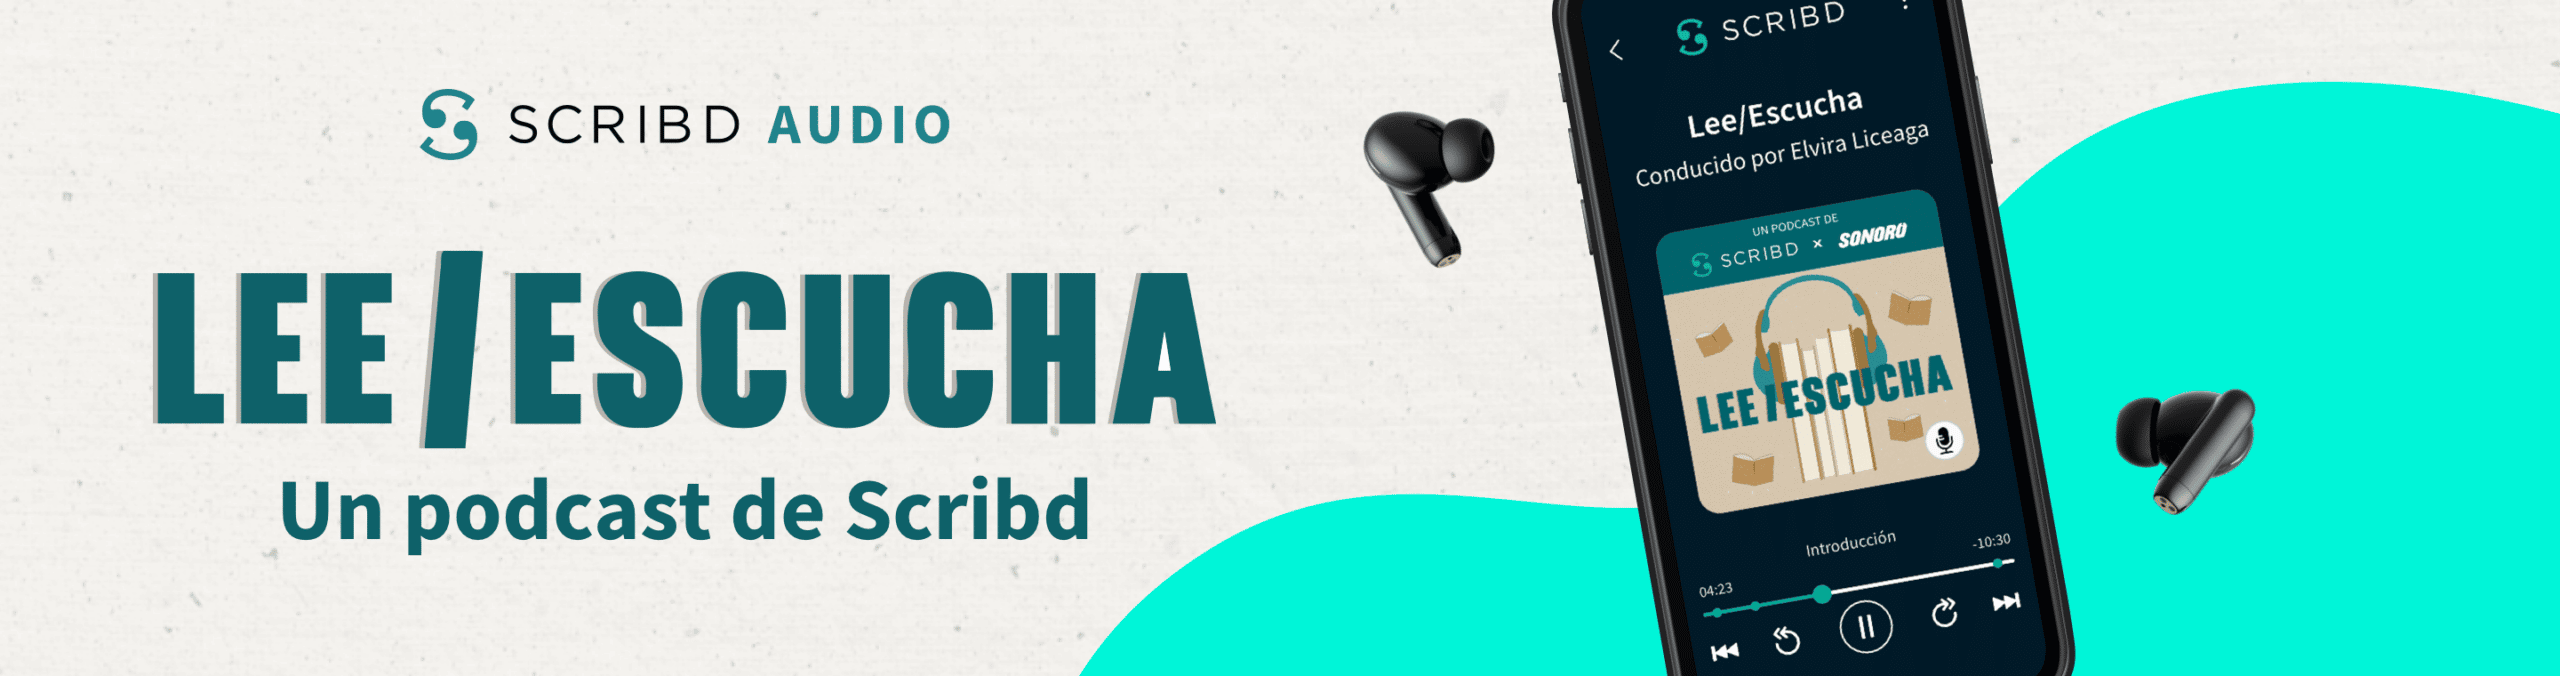 Scribd Audio Spanish launches inaugural podcast